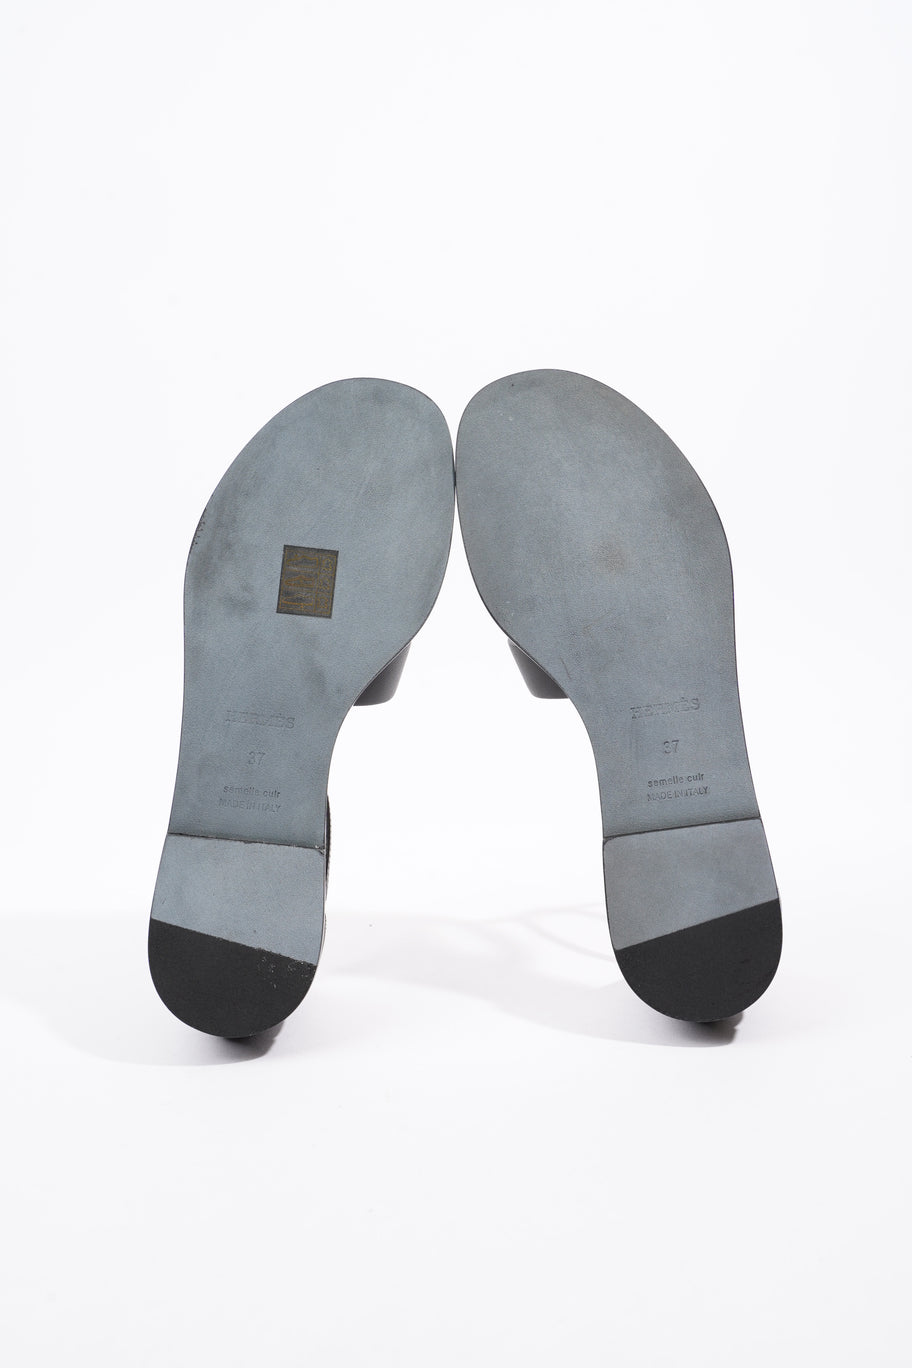 Hermes Santorini Sandals Black Calfskin Leather EU 37 UK 4 Image 7